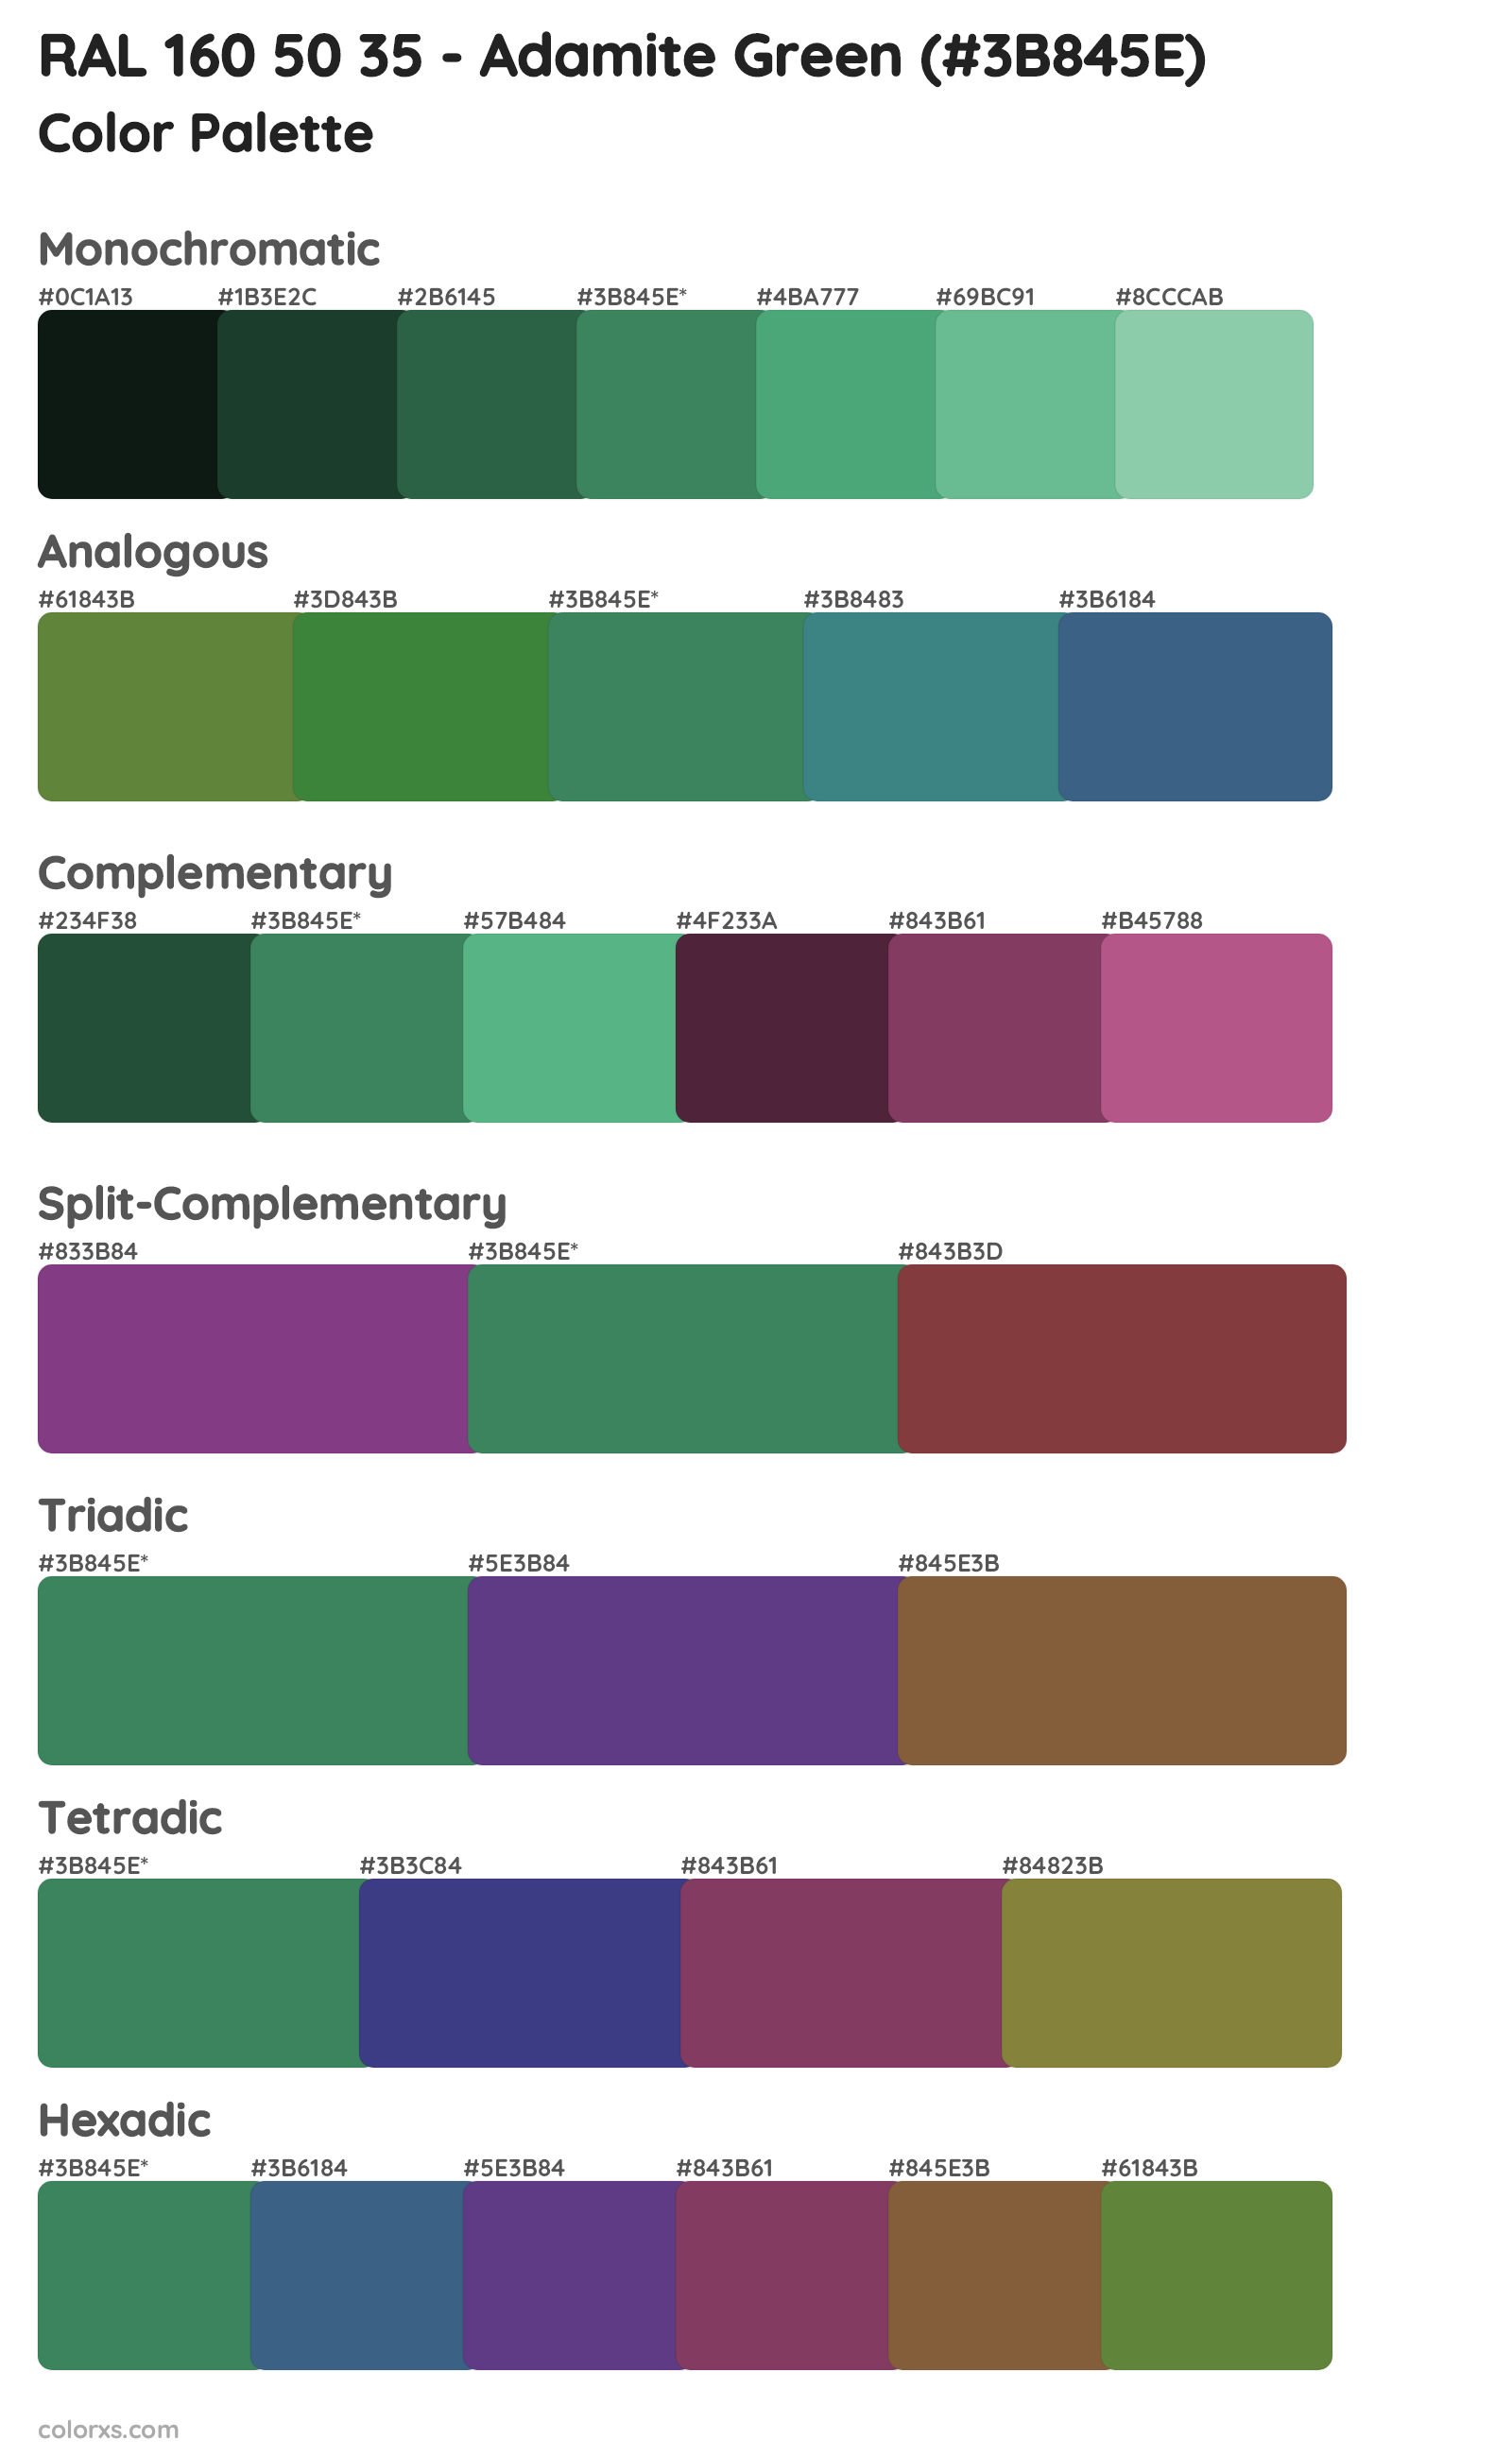 RAL 160 50 35 - Adamite Green Color Scheme Palettes